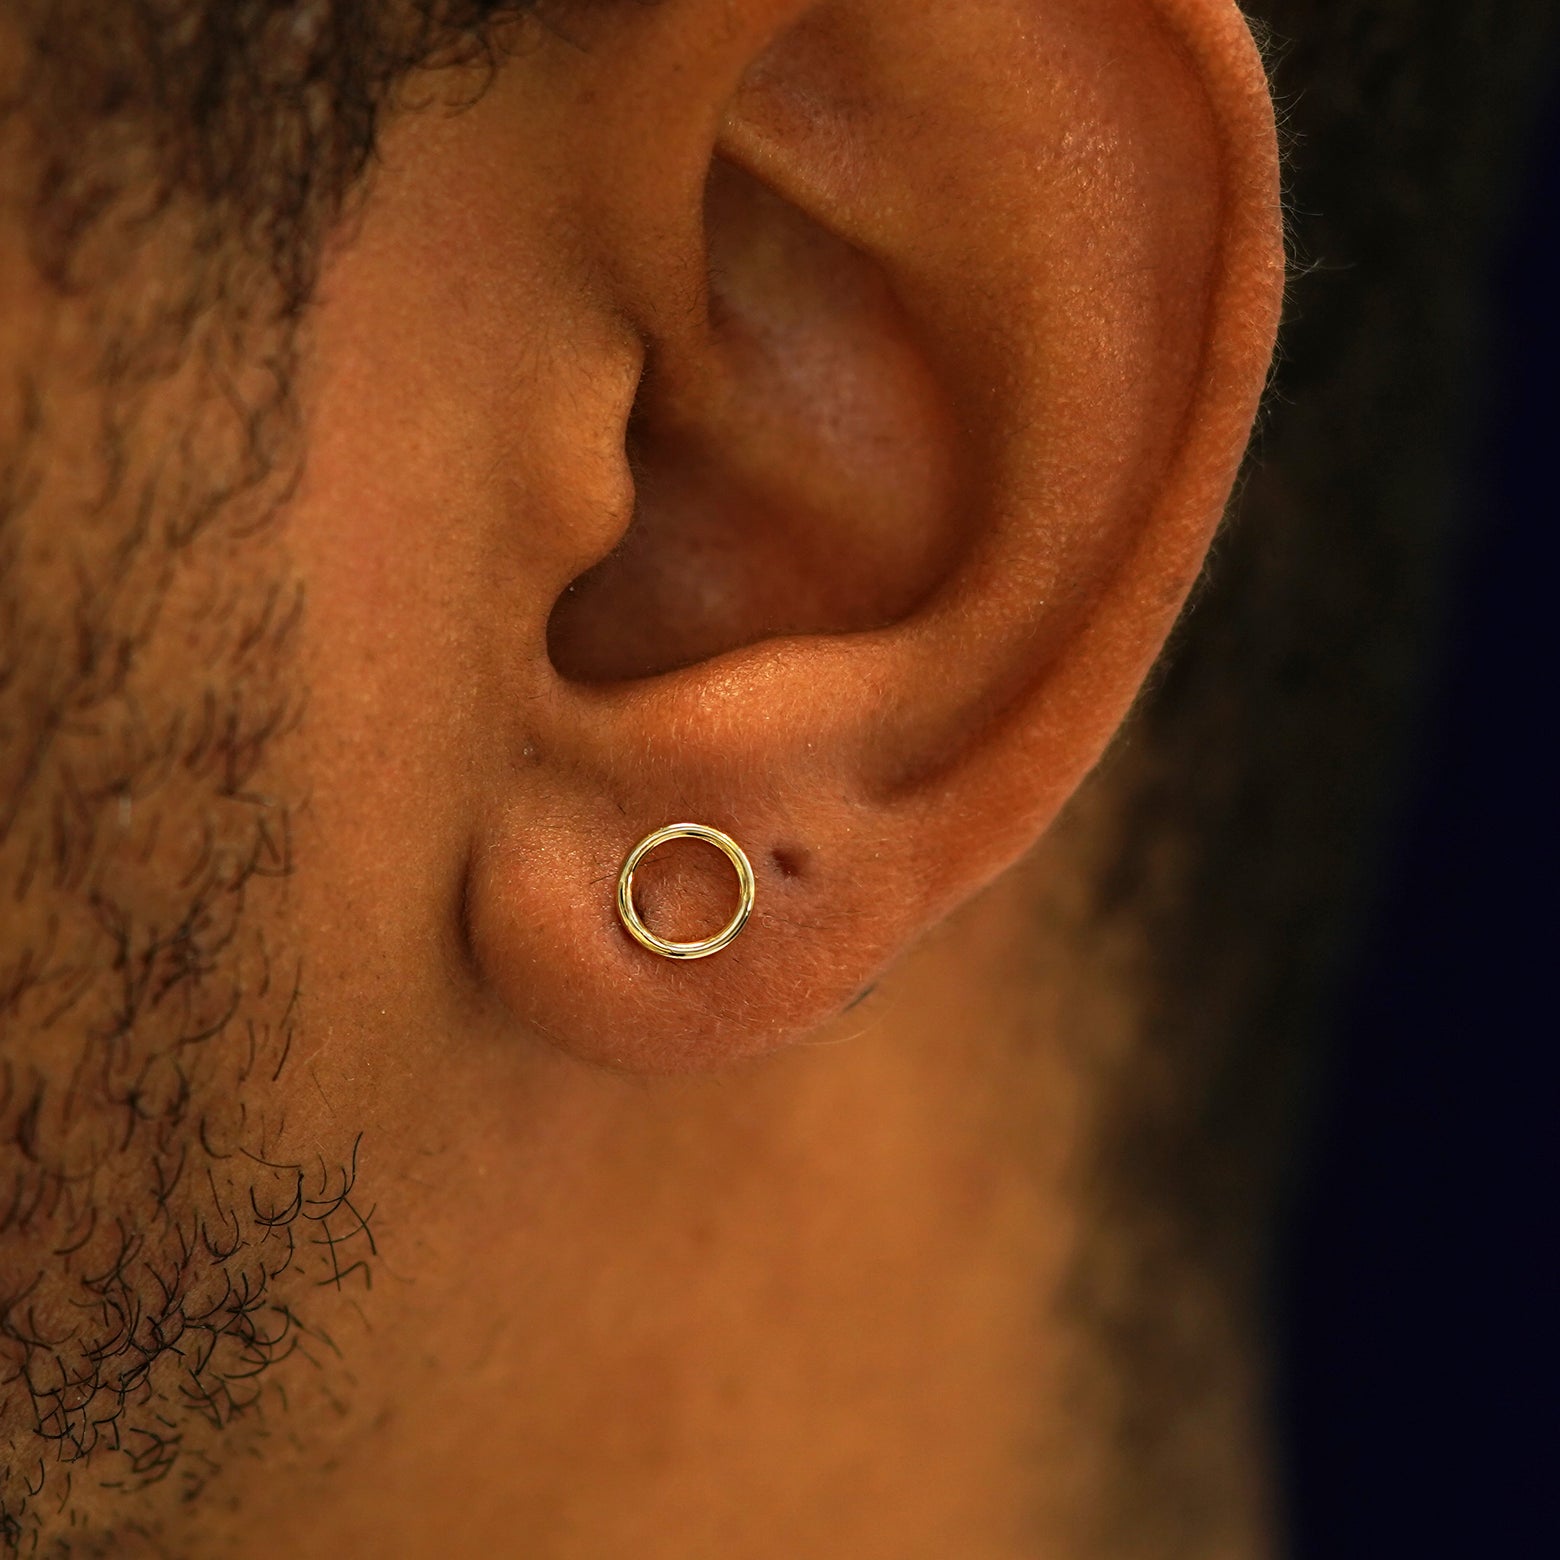 A model's ear wearing a 14k yellow gold Open Circle Earring